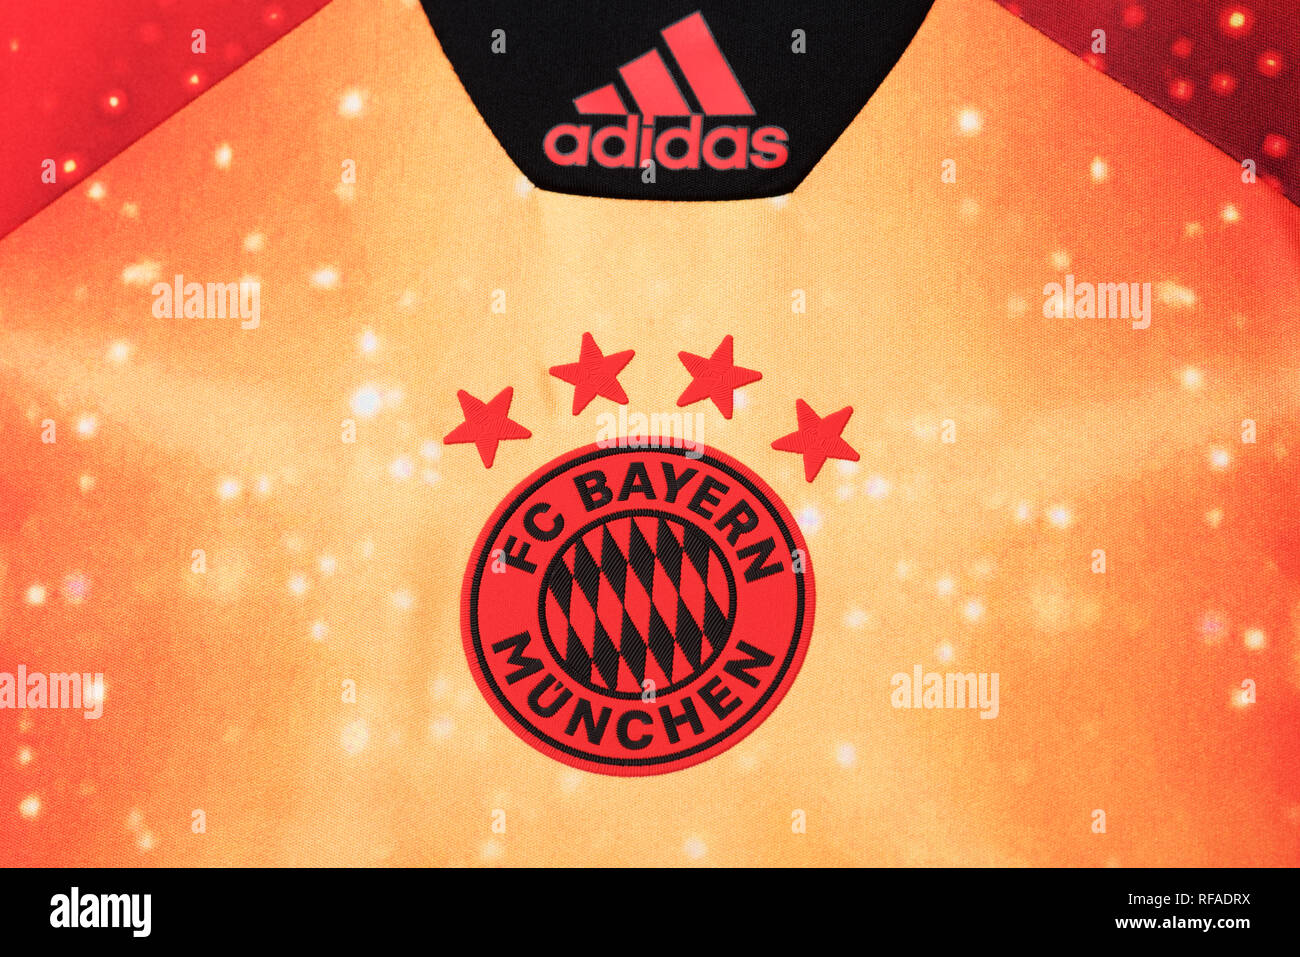 Le FC Bayern Munchen limited edition EA Sports dans le New Jersey. Banque D'Images